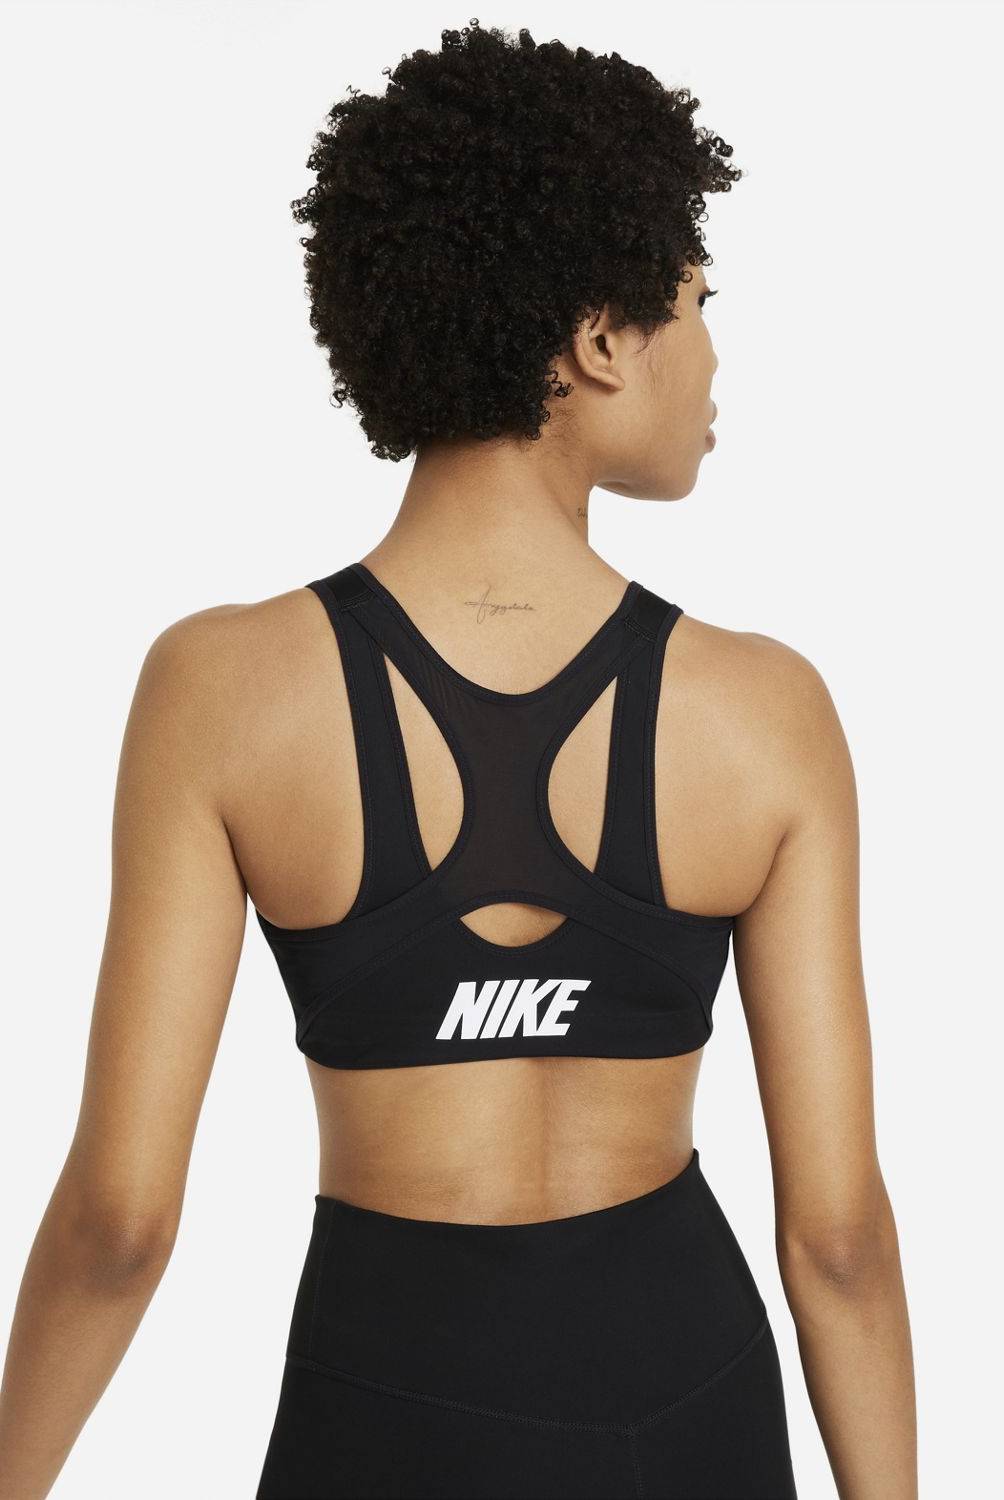 NIKE - Nike Peto Deportivo Mujer